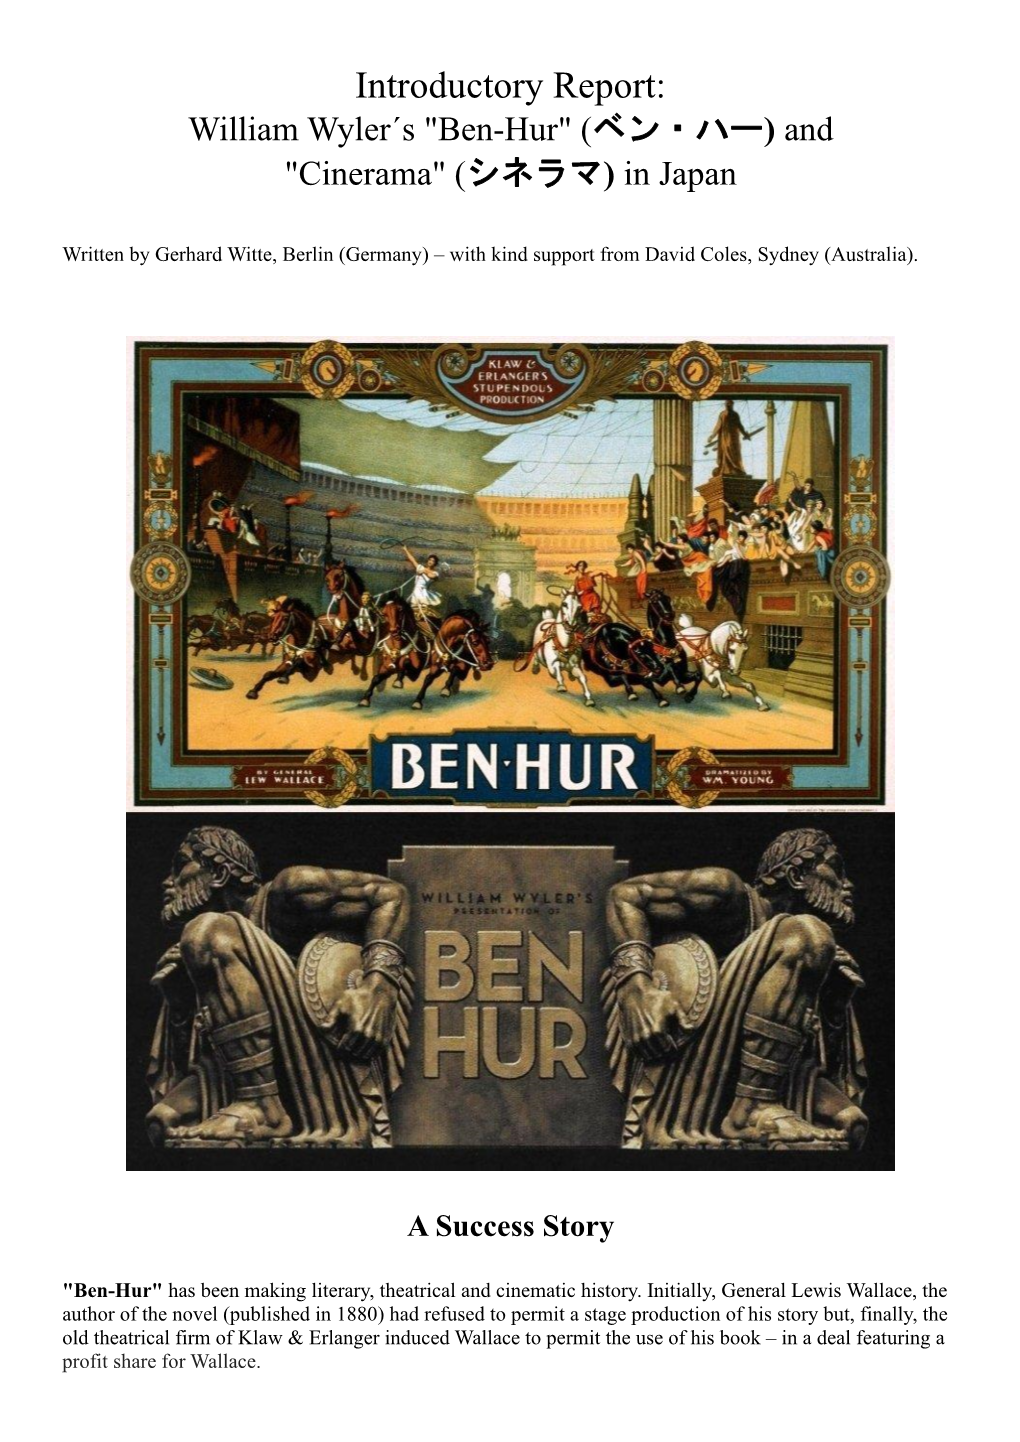 Introductory Report: William Wyler´S "Ben-Hur" and "Cinerama"